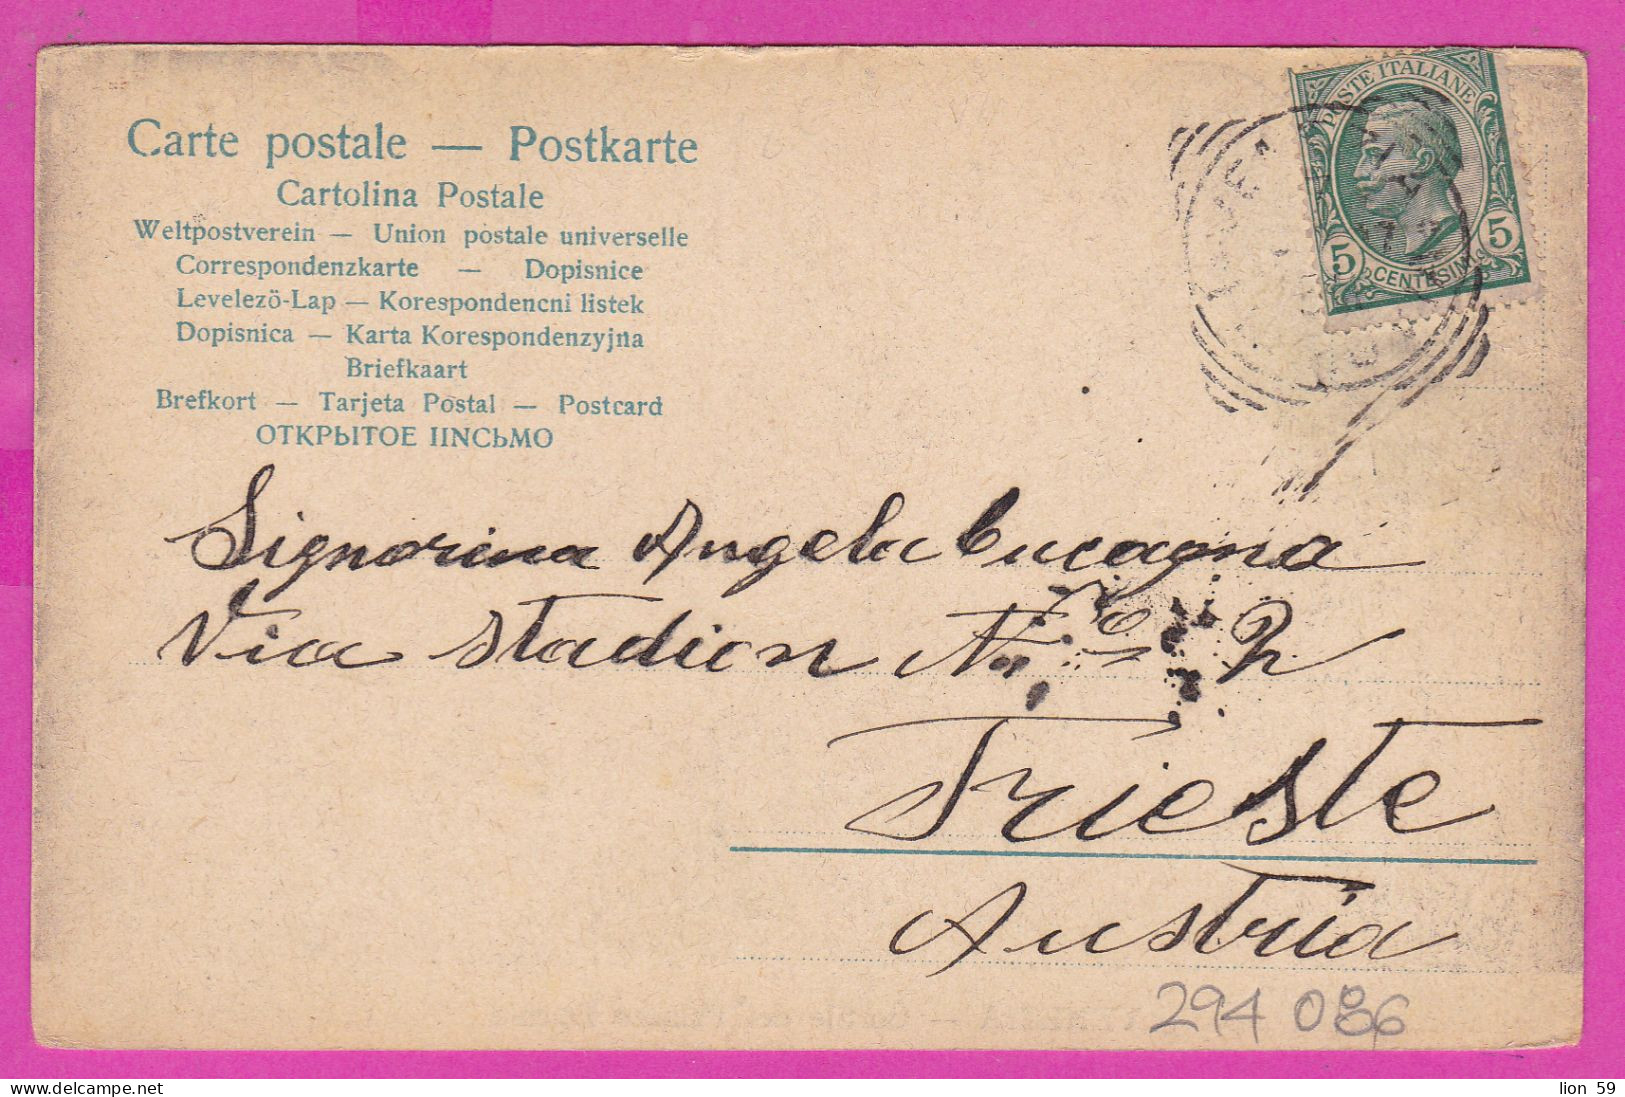 294086 / Italy - VENEZIA - Cortile Del Palazzo Ducale PC 1907 USED 5 Cent. Victor Emmanuel III , Victor Emmanuel III - Storia Postale